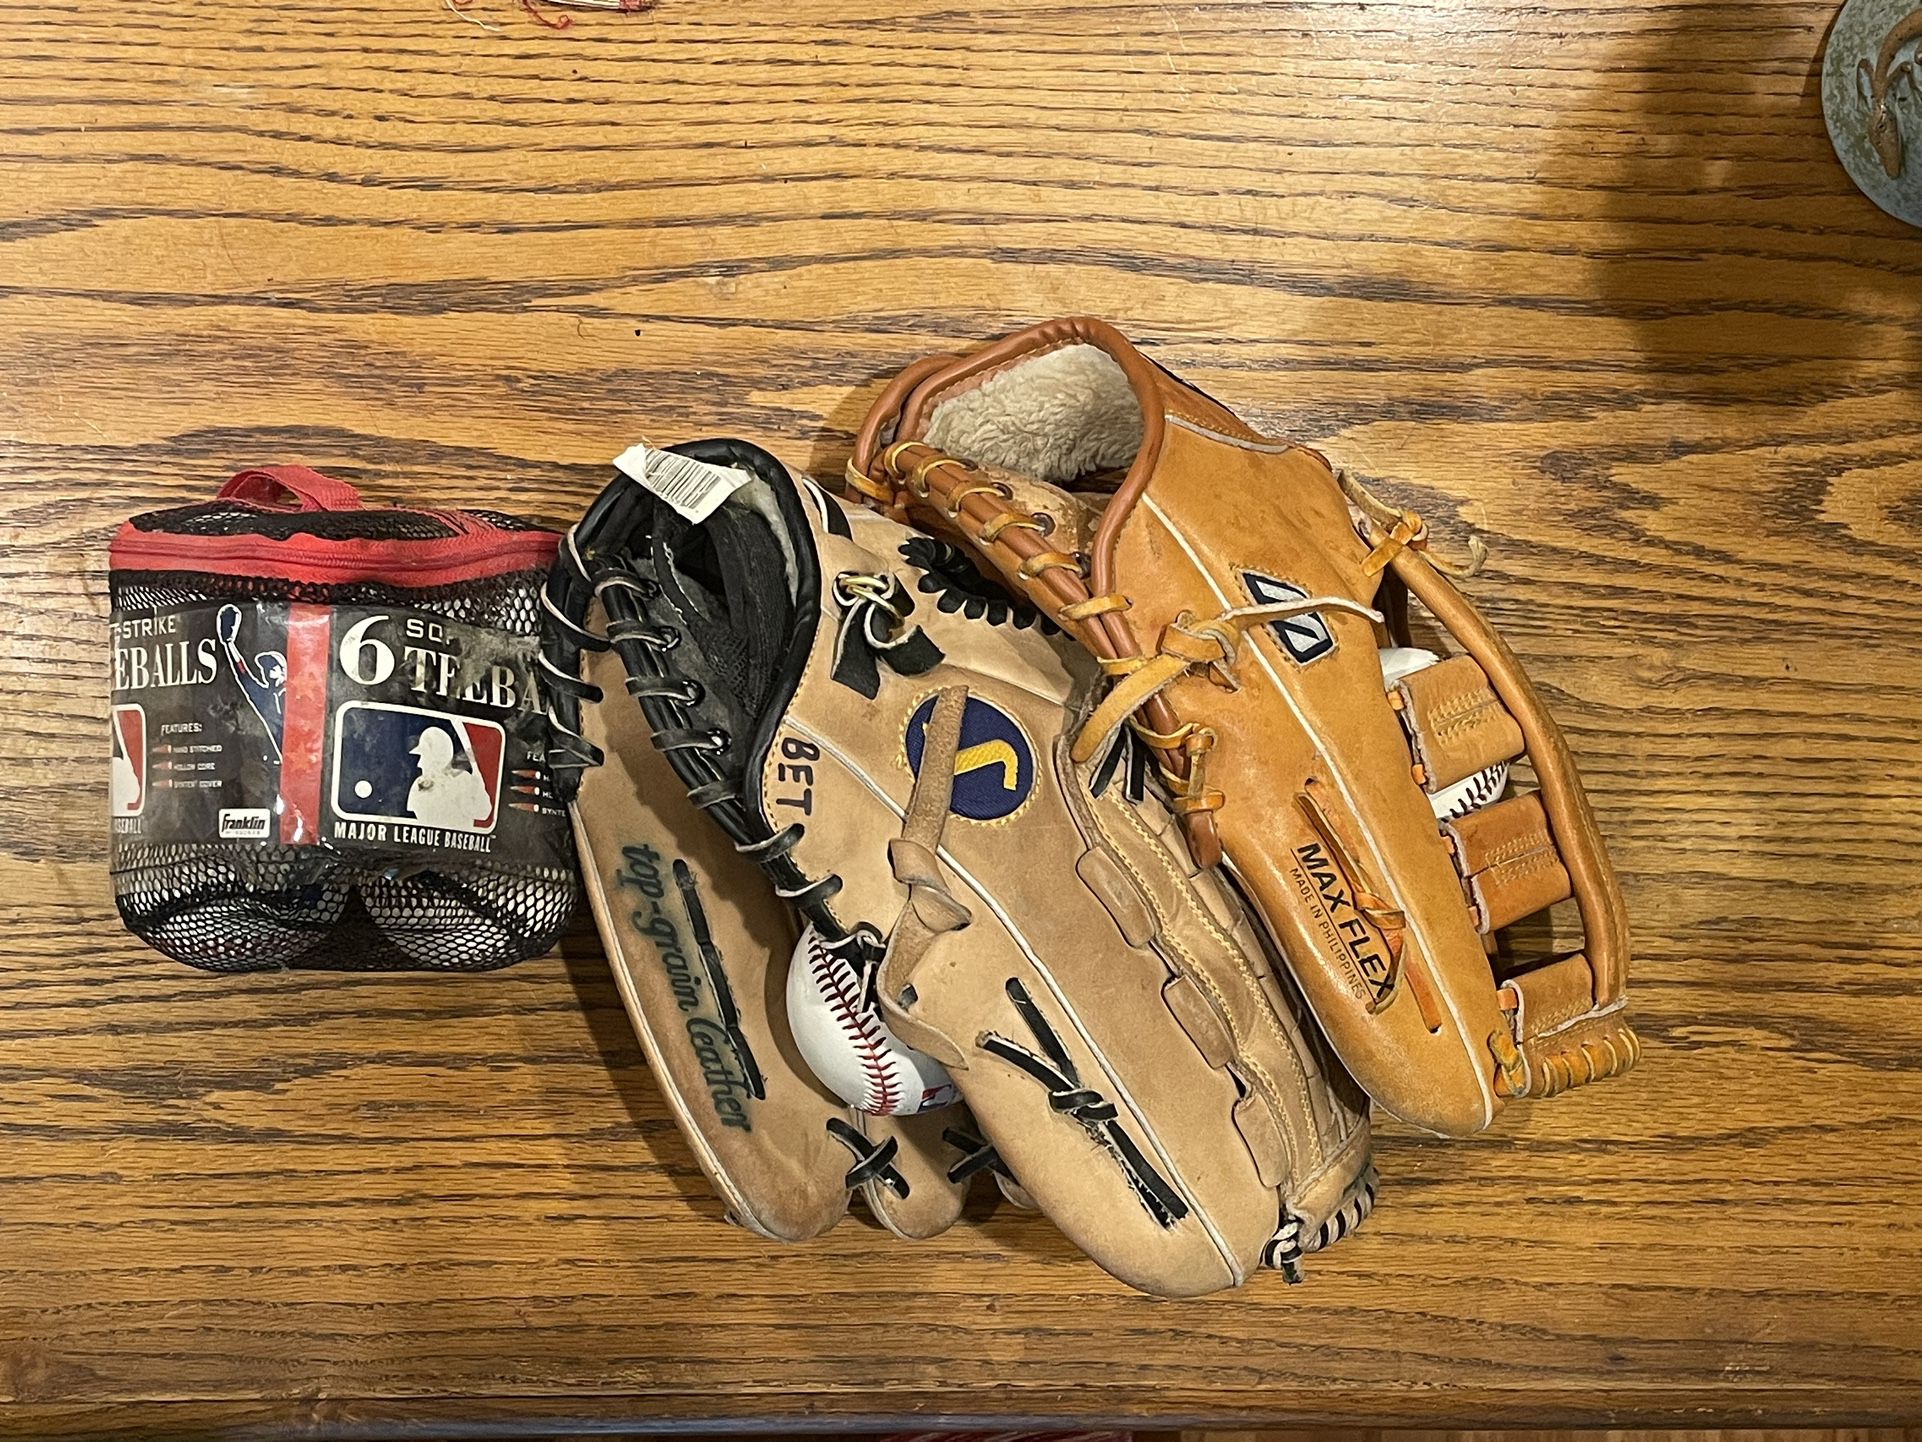 Two Baseball Gloves, One Large, One Medium. Multiple Softball/Baseball Balls Included